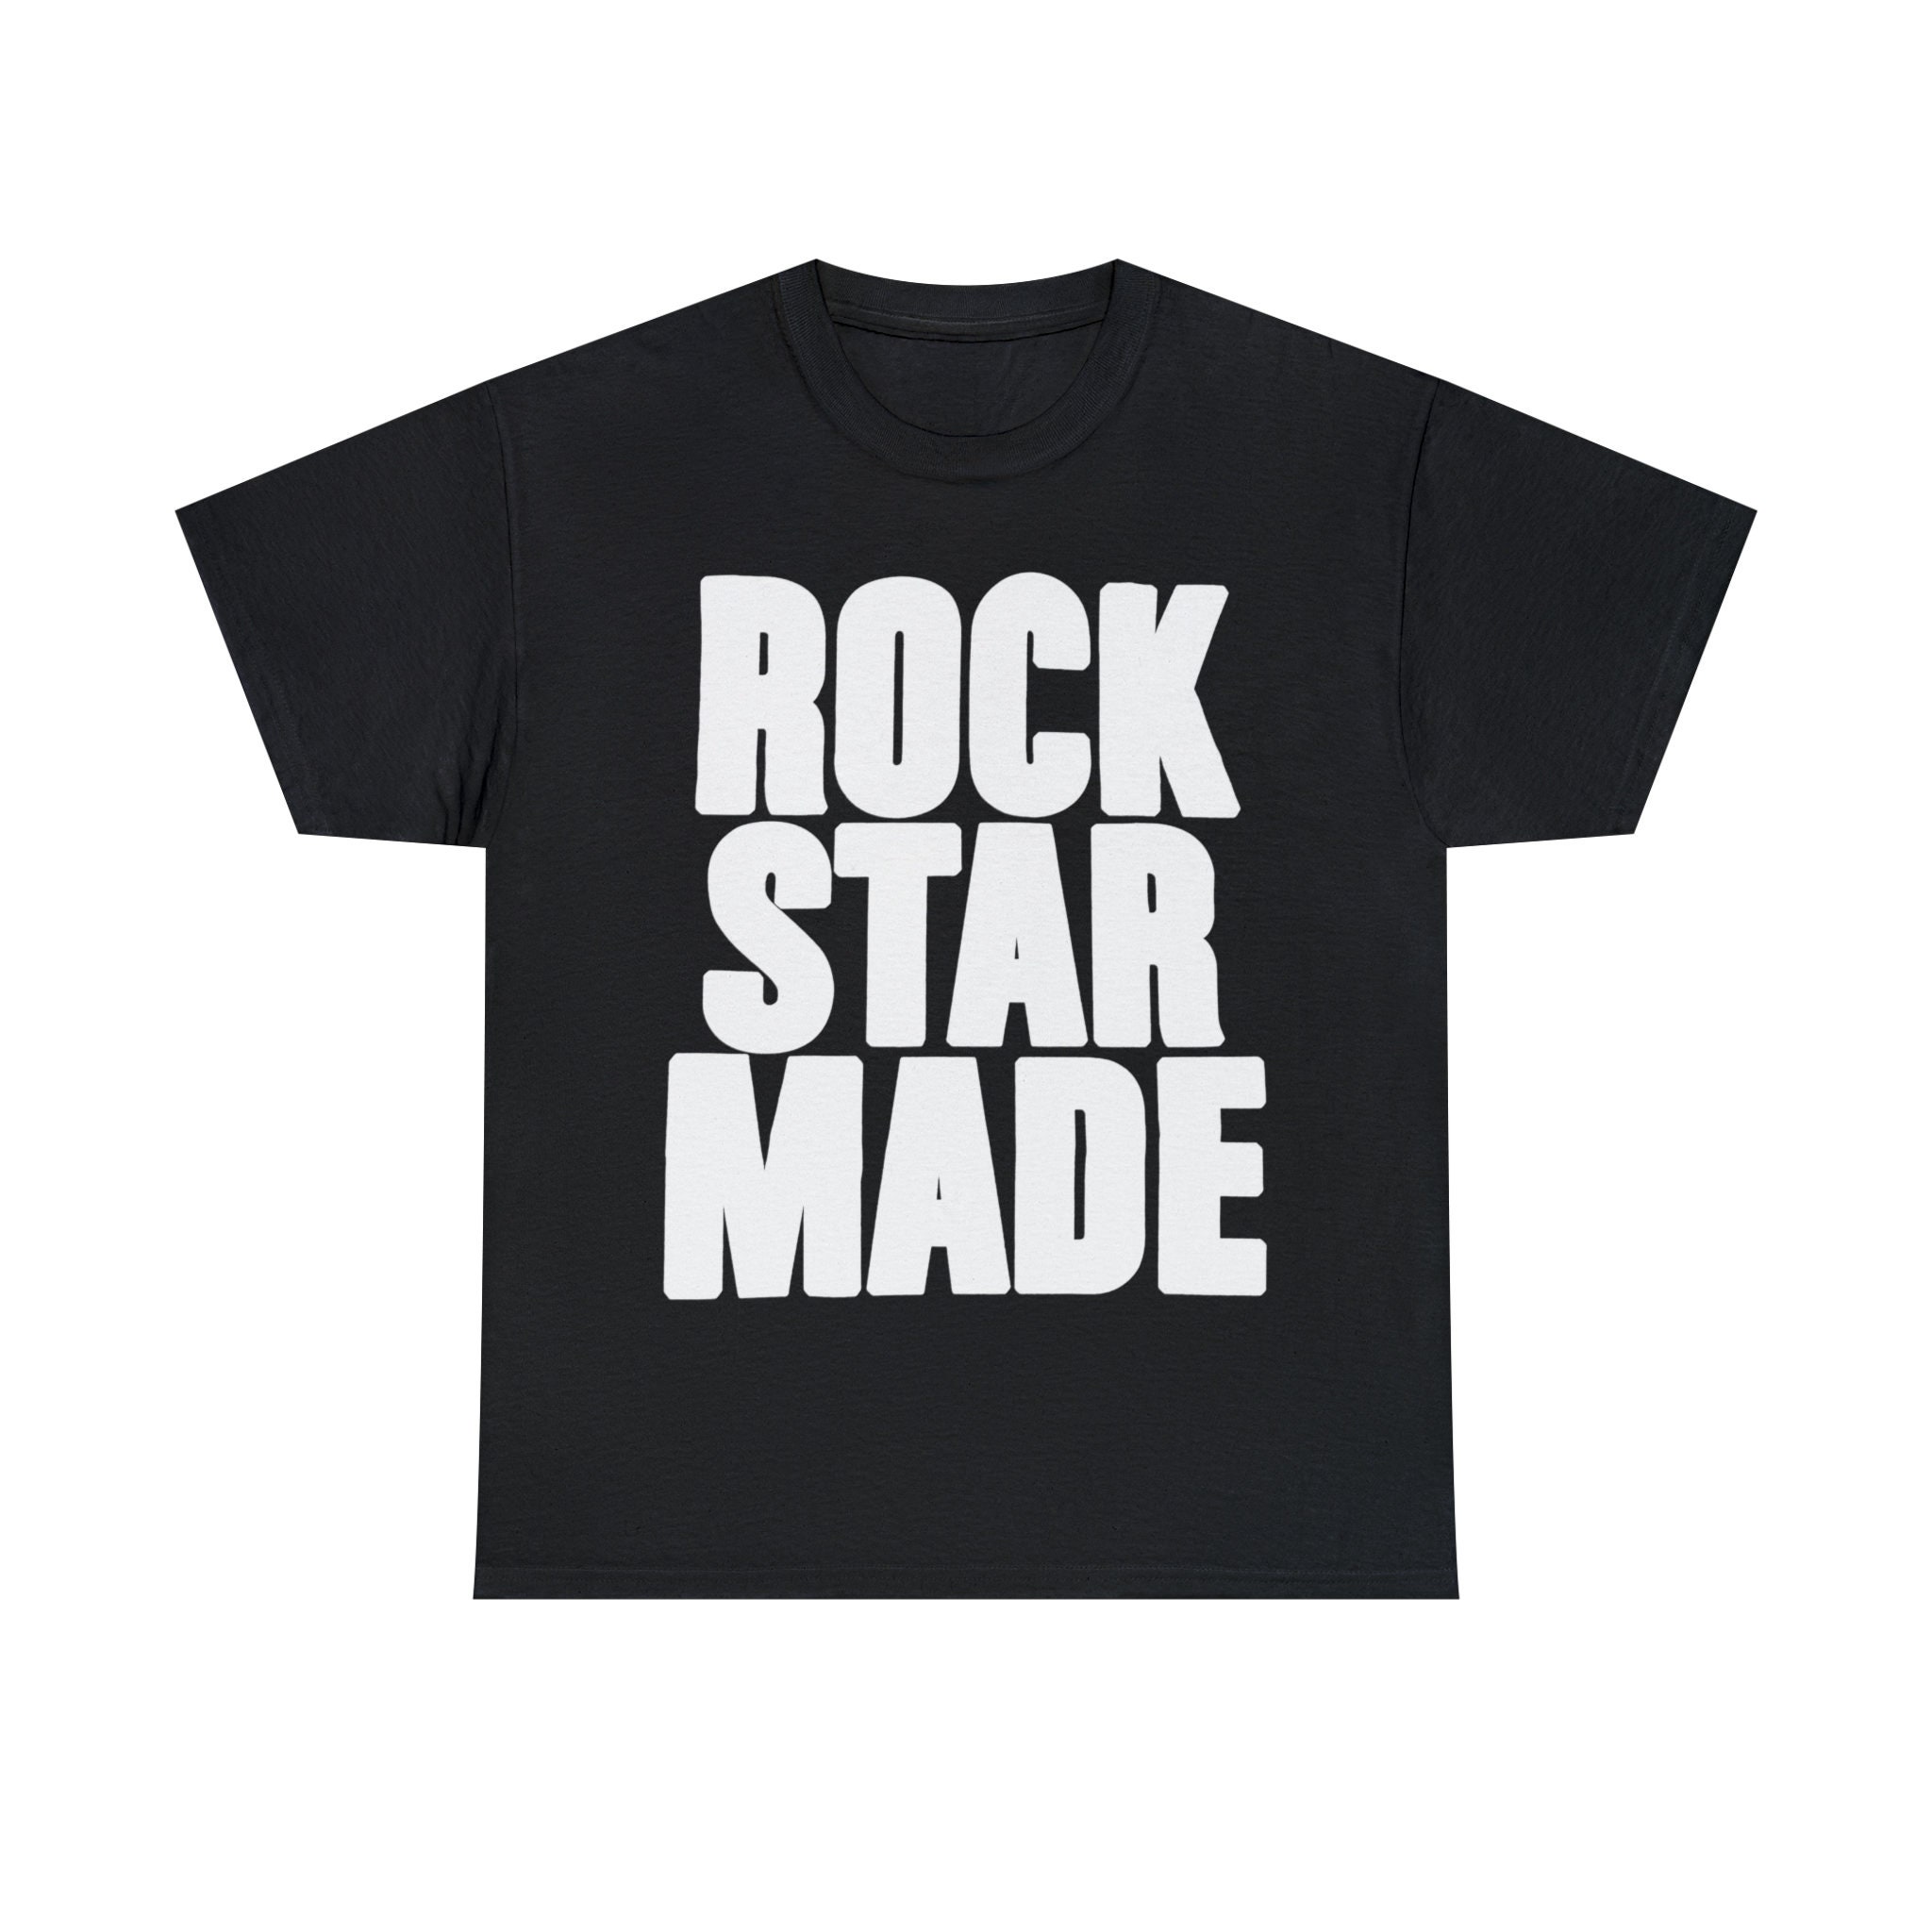 Retro Vintage Rockstar Made Shirt